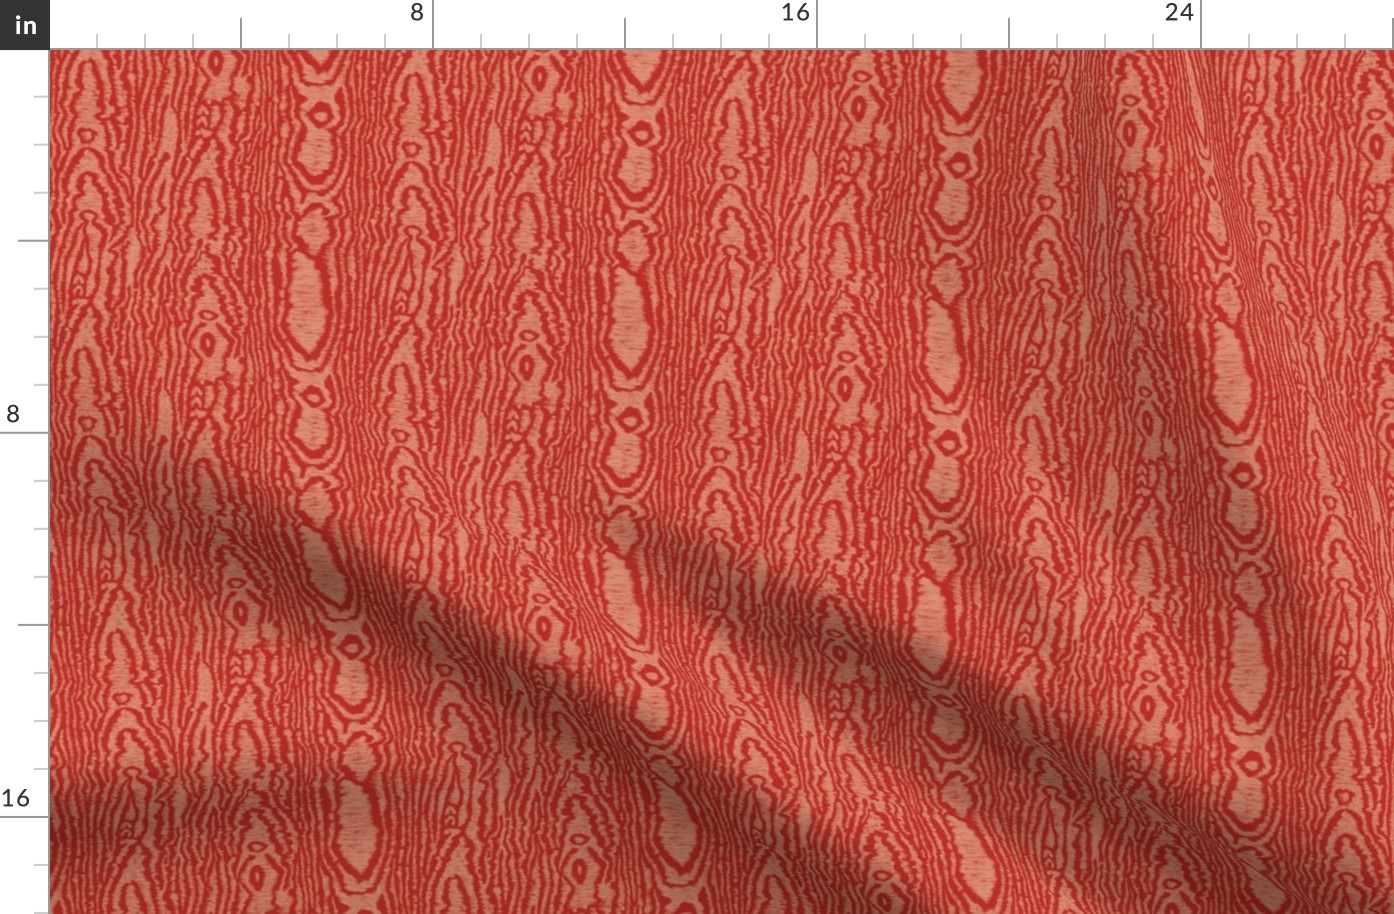 Moire Texture (Medium) - Poppy Red  (TBS101A)